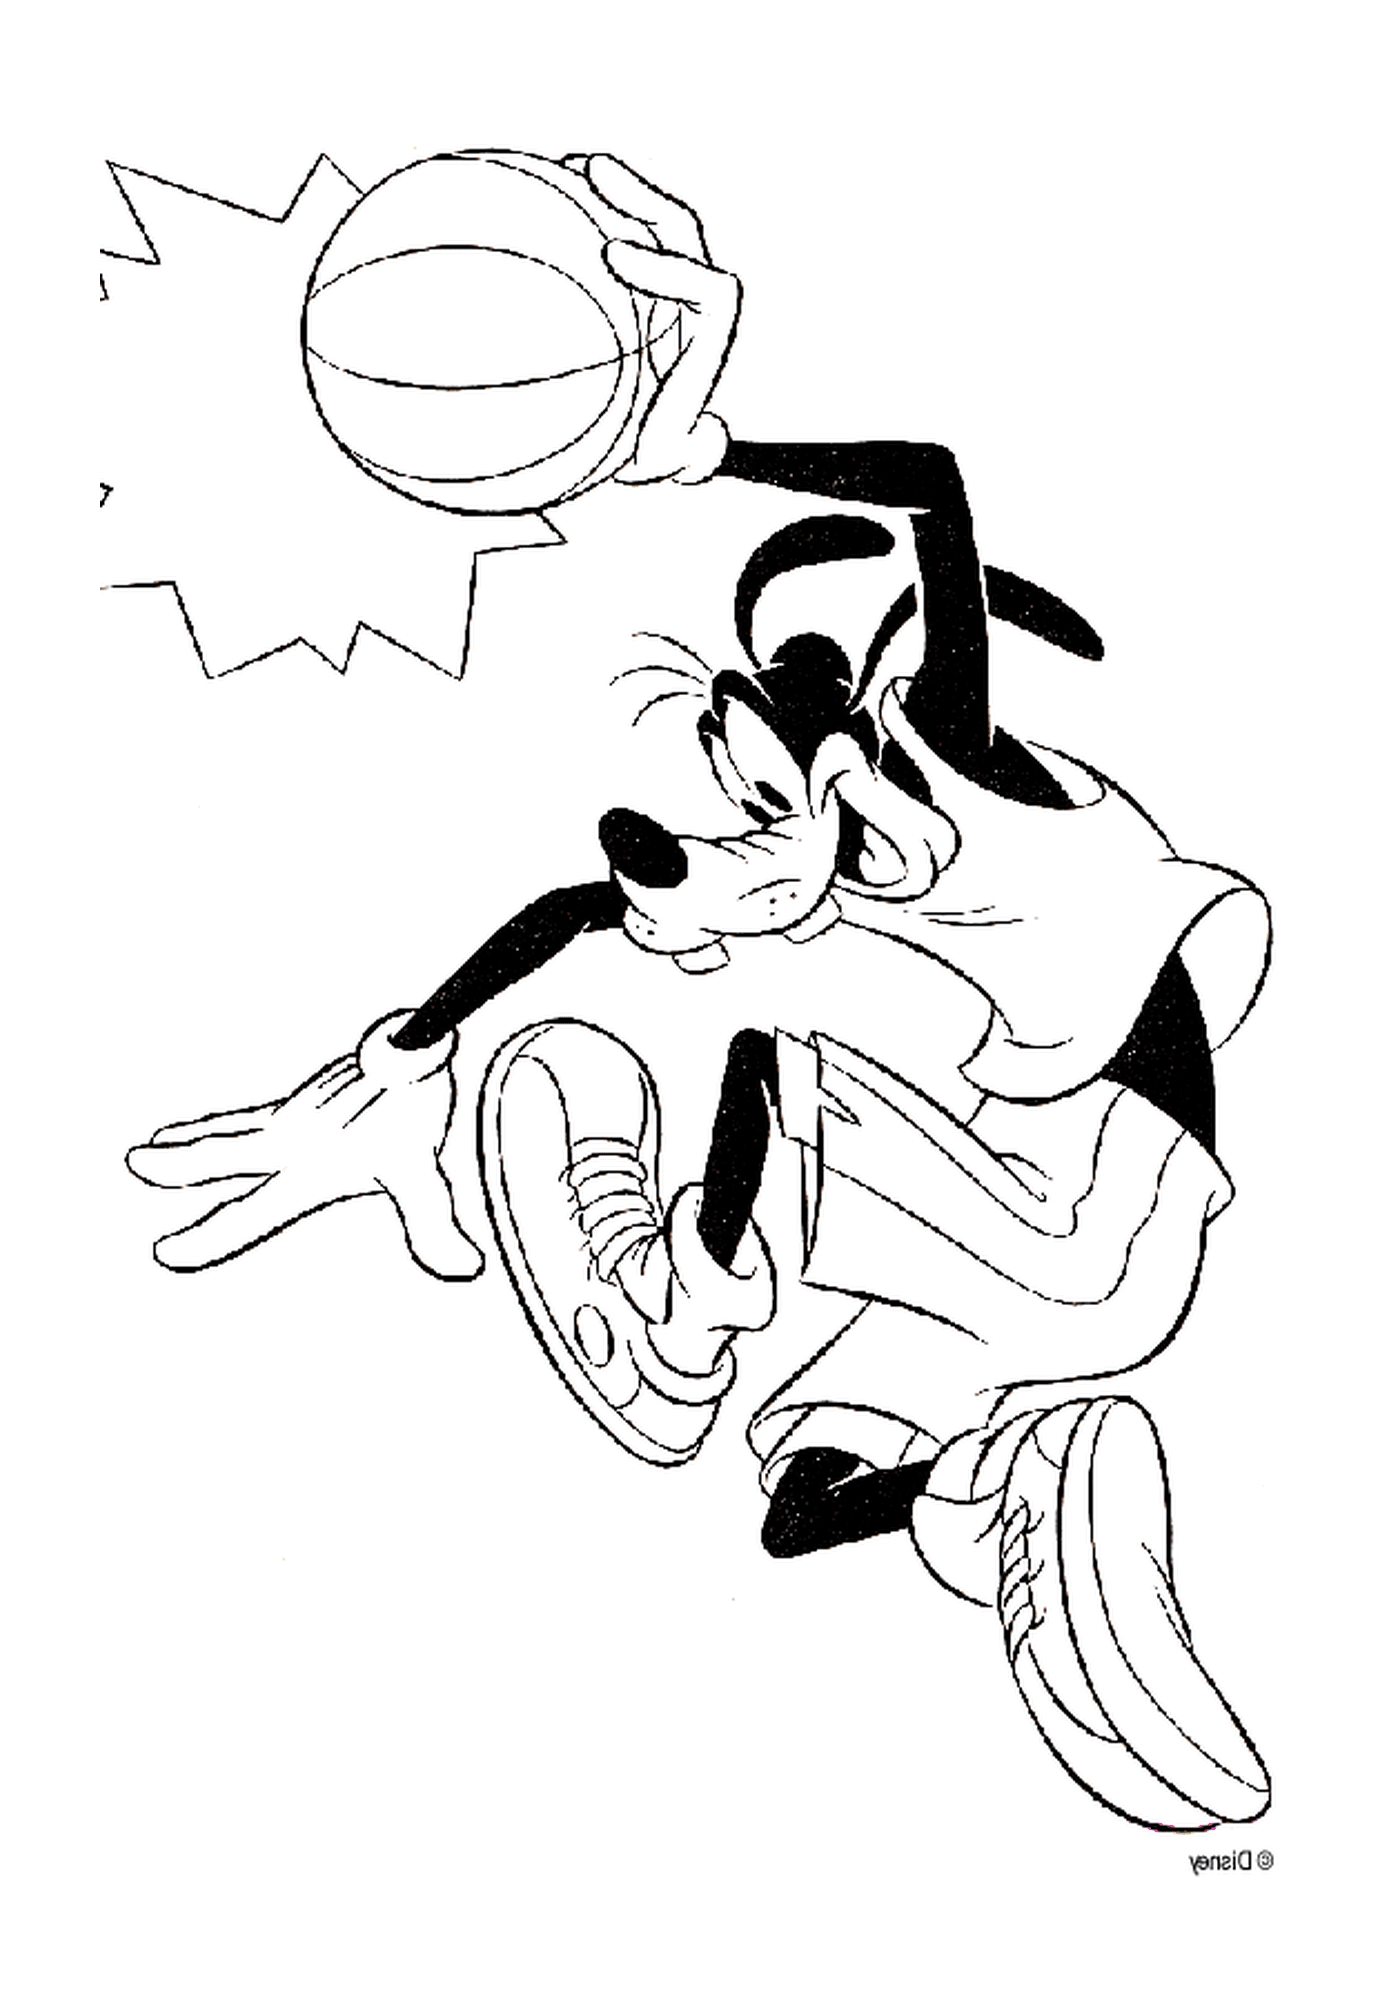  Dingo plays basketball with a ball 